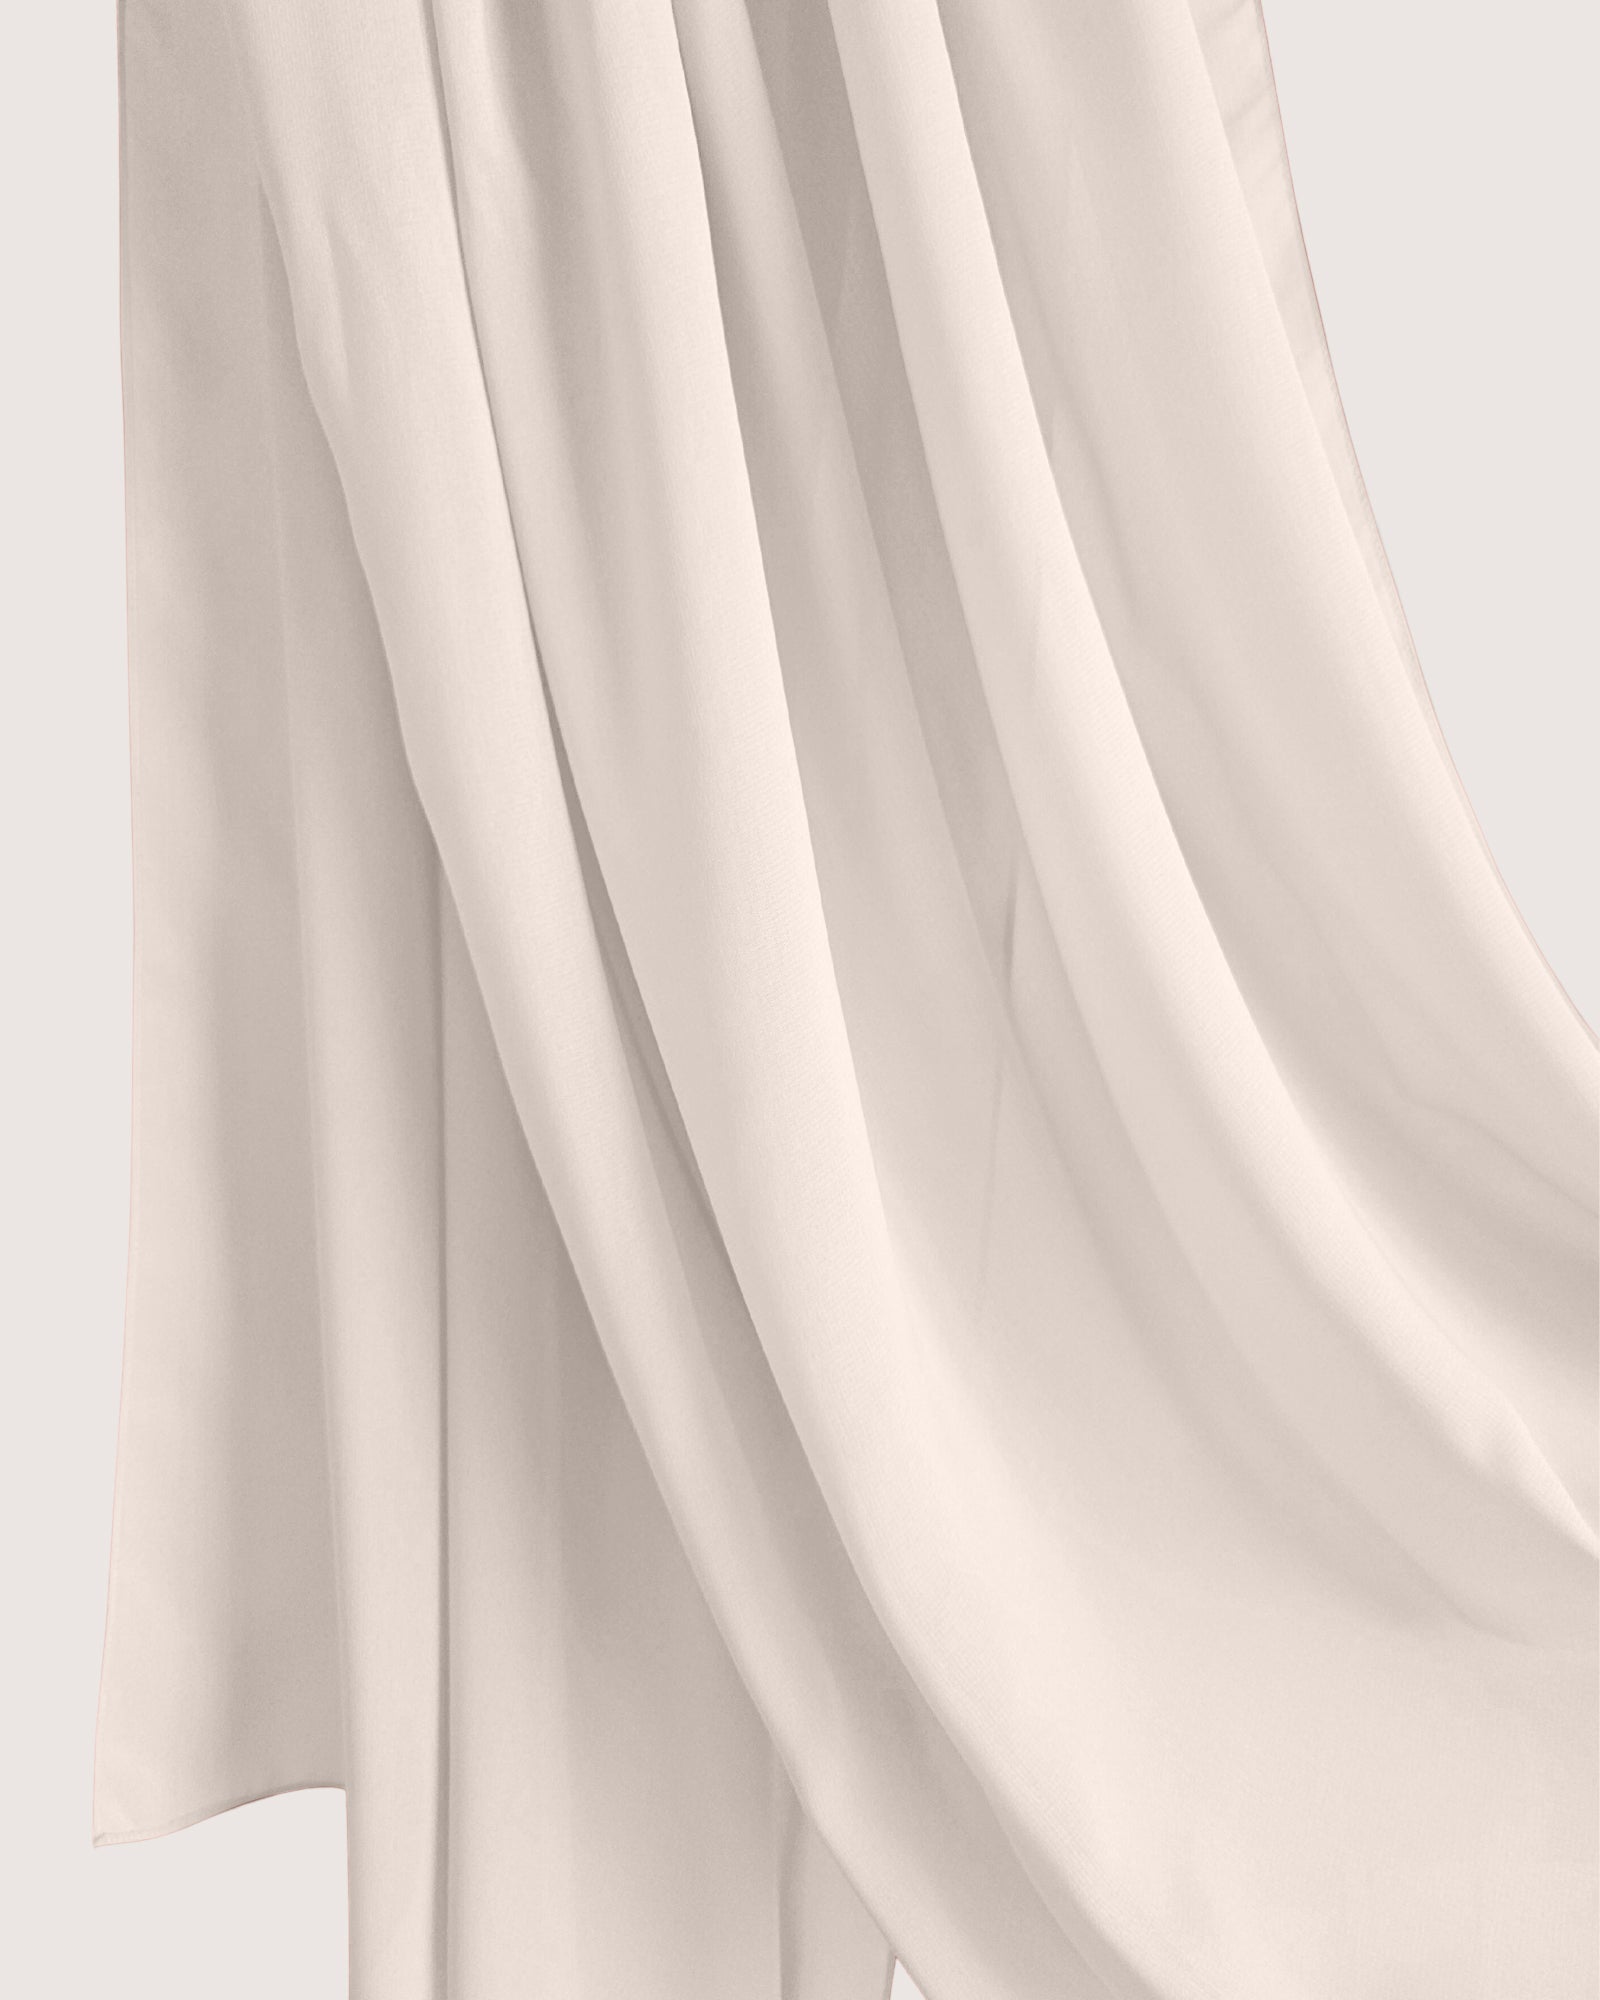 Premium Pearl White Chiffon Hijab Scarf